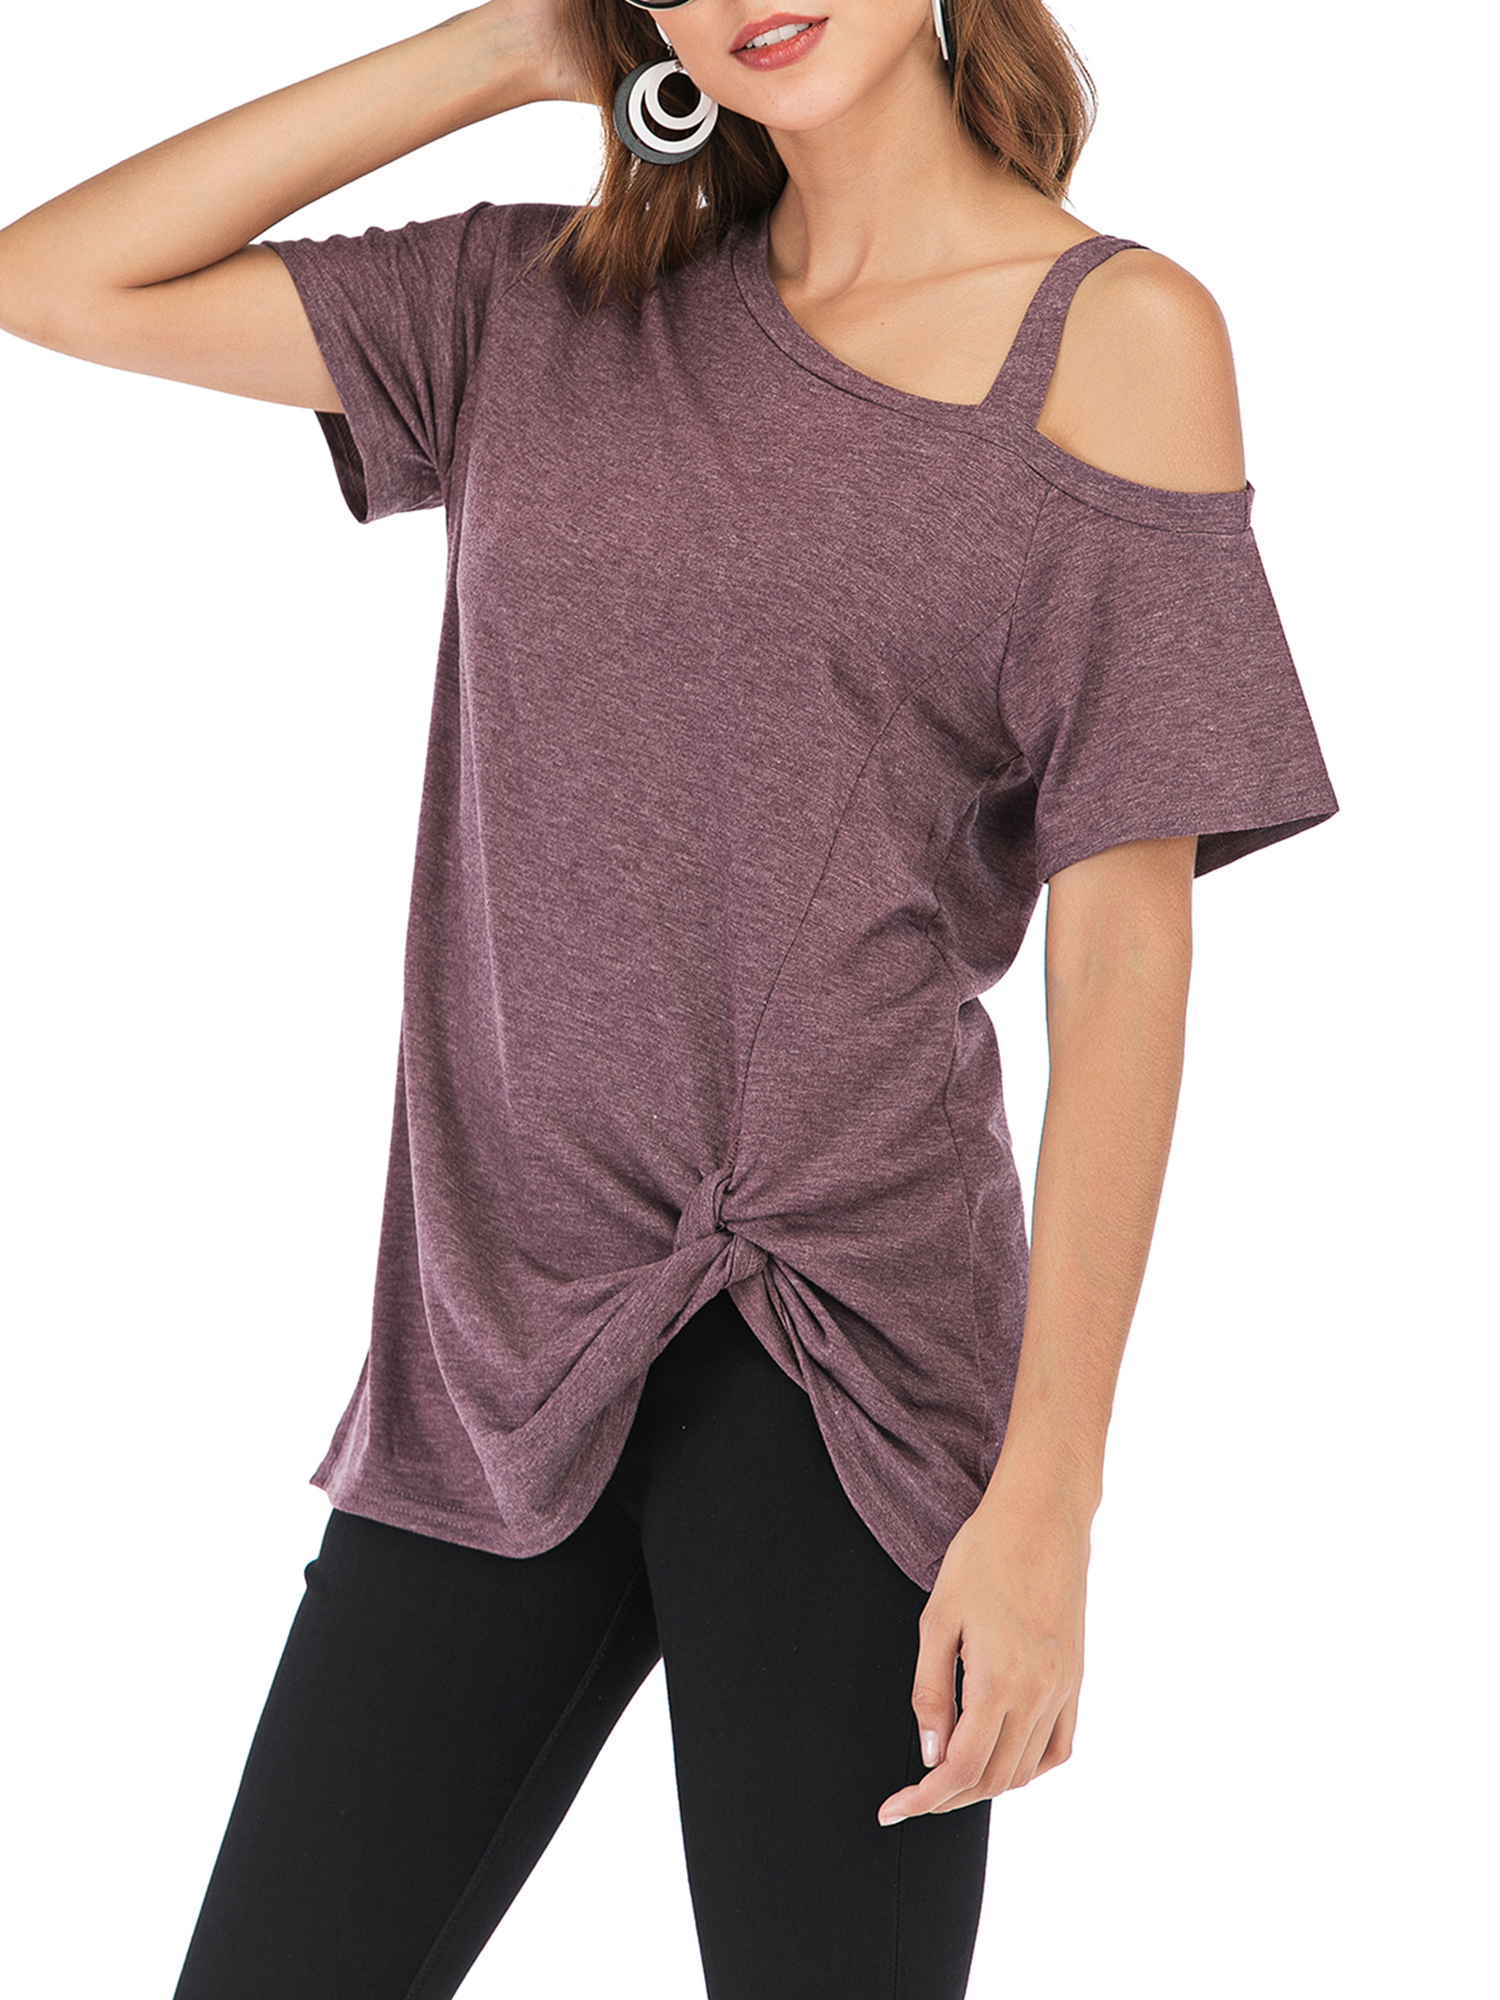 SAYFUT Women's Cold Shoulder T-Shirt  Plus Size Cold Shoulder Tops Short Sleeve Tops Blouse Fashion Knot Twist Front Blouse Tunic Tops S-2XL - image 5 of 8